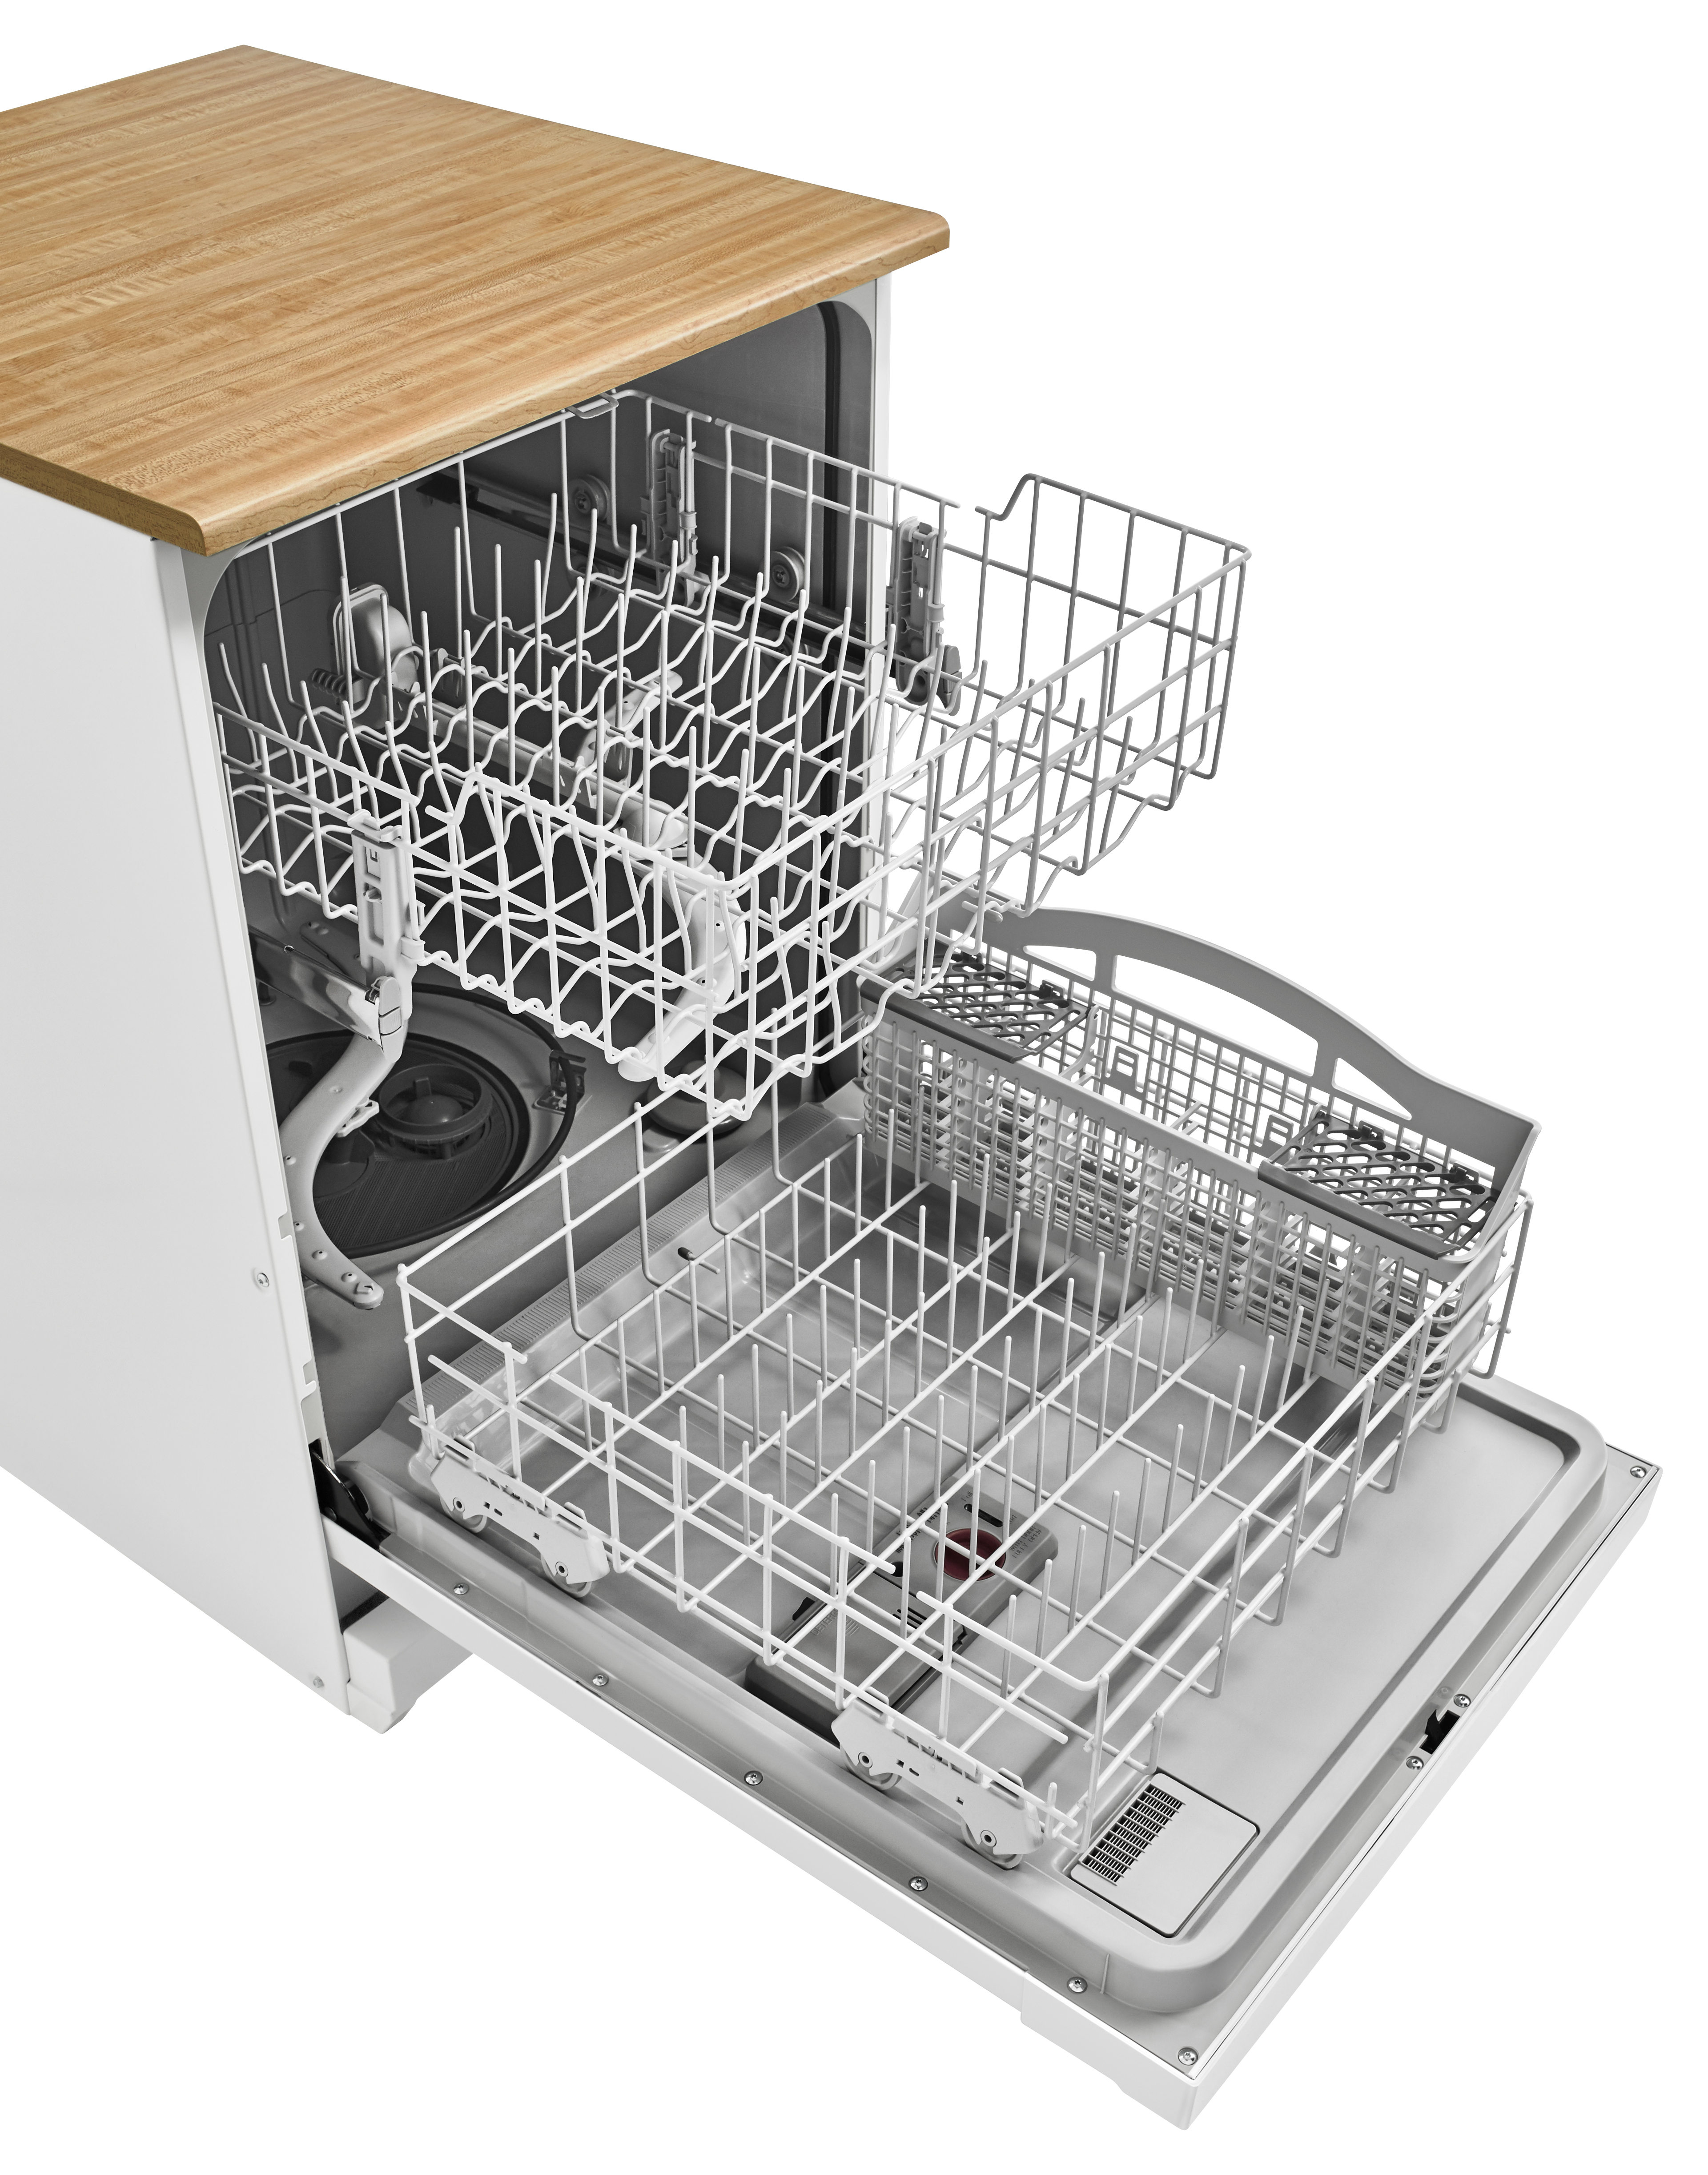 kenmore 18 inch dishwasher